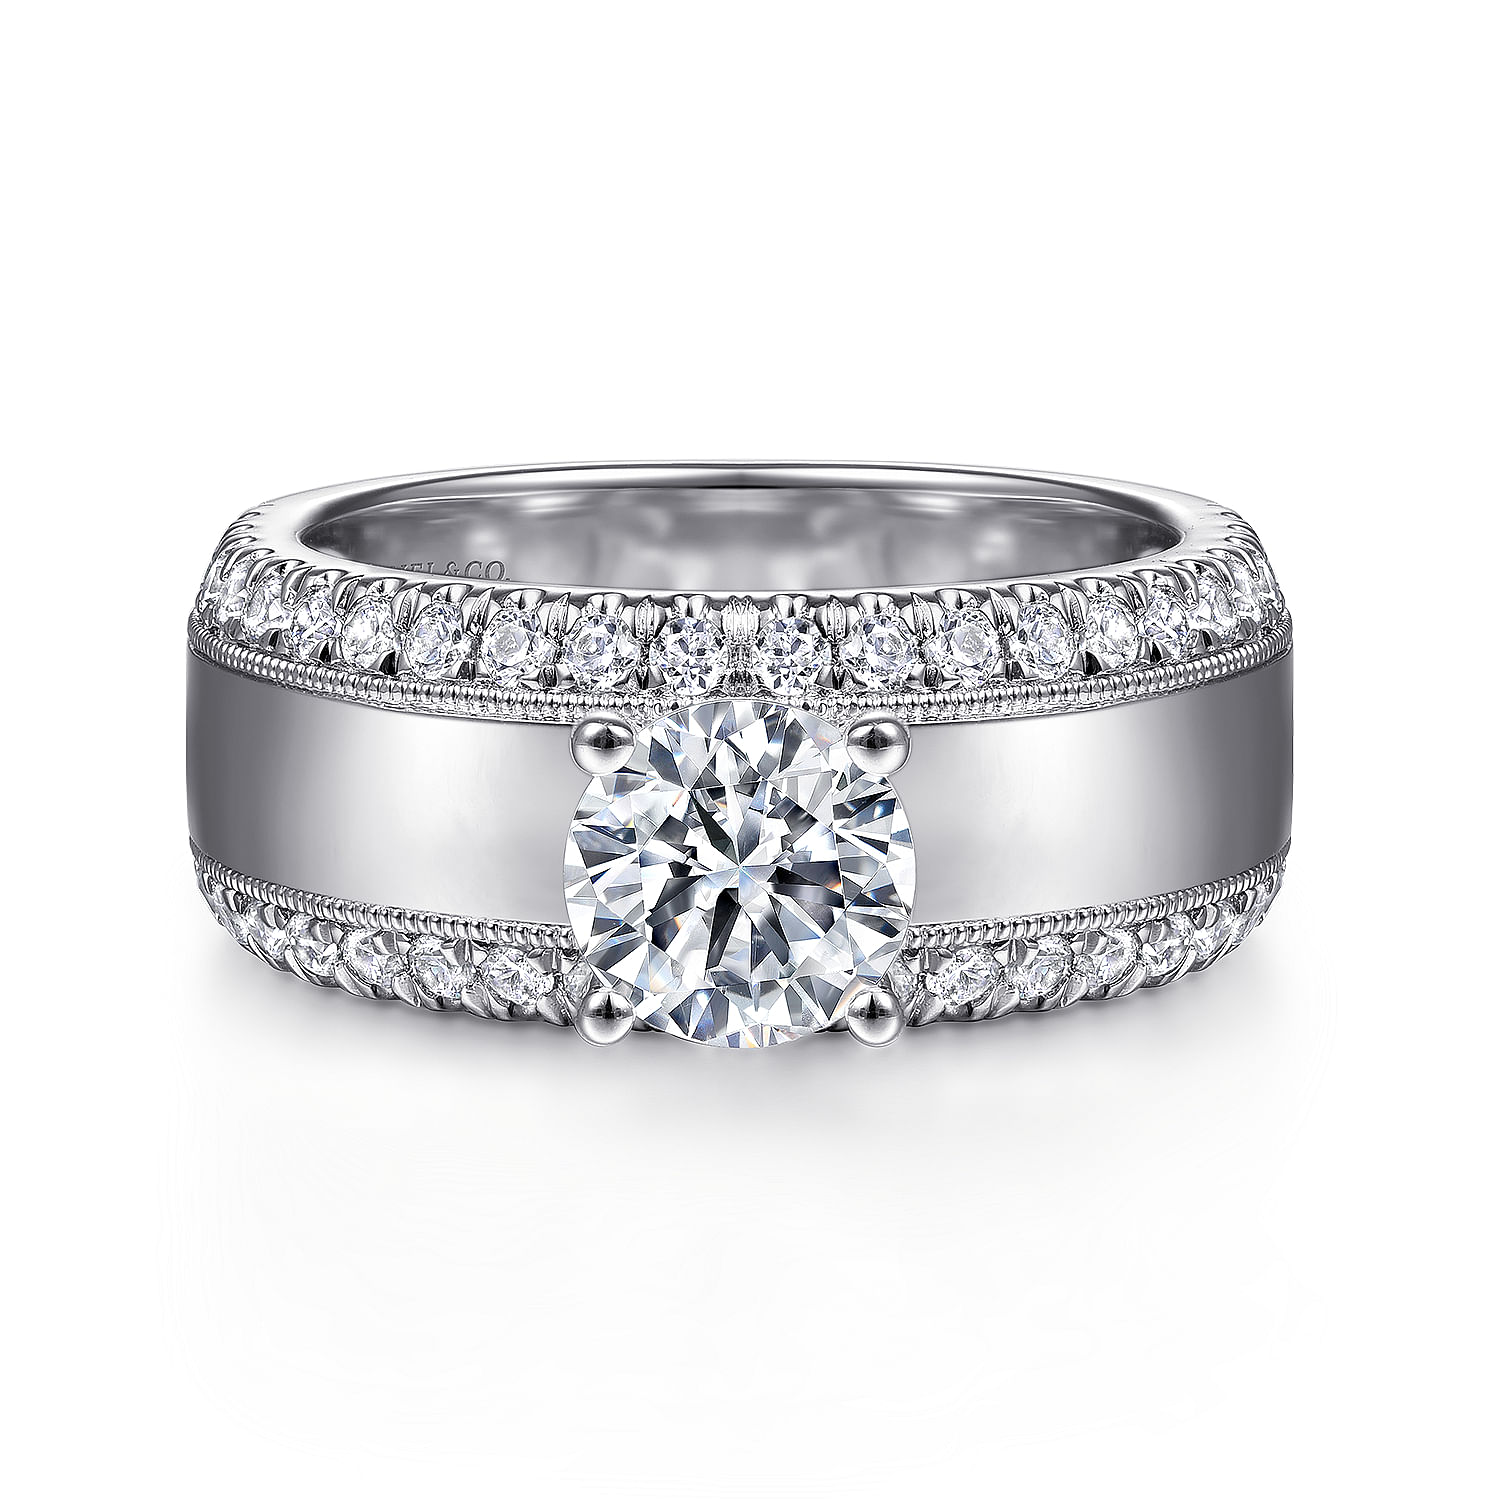 Amos - 14K White Gold Round Diamond Wide Band Engagement Ring